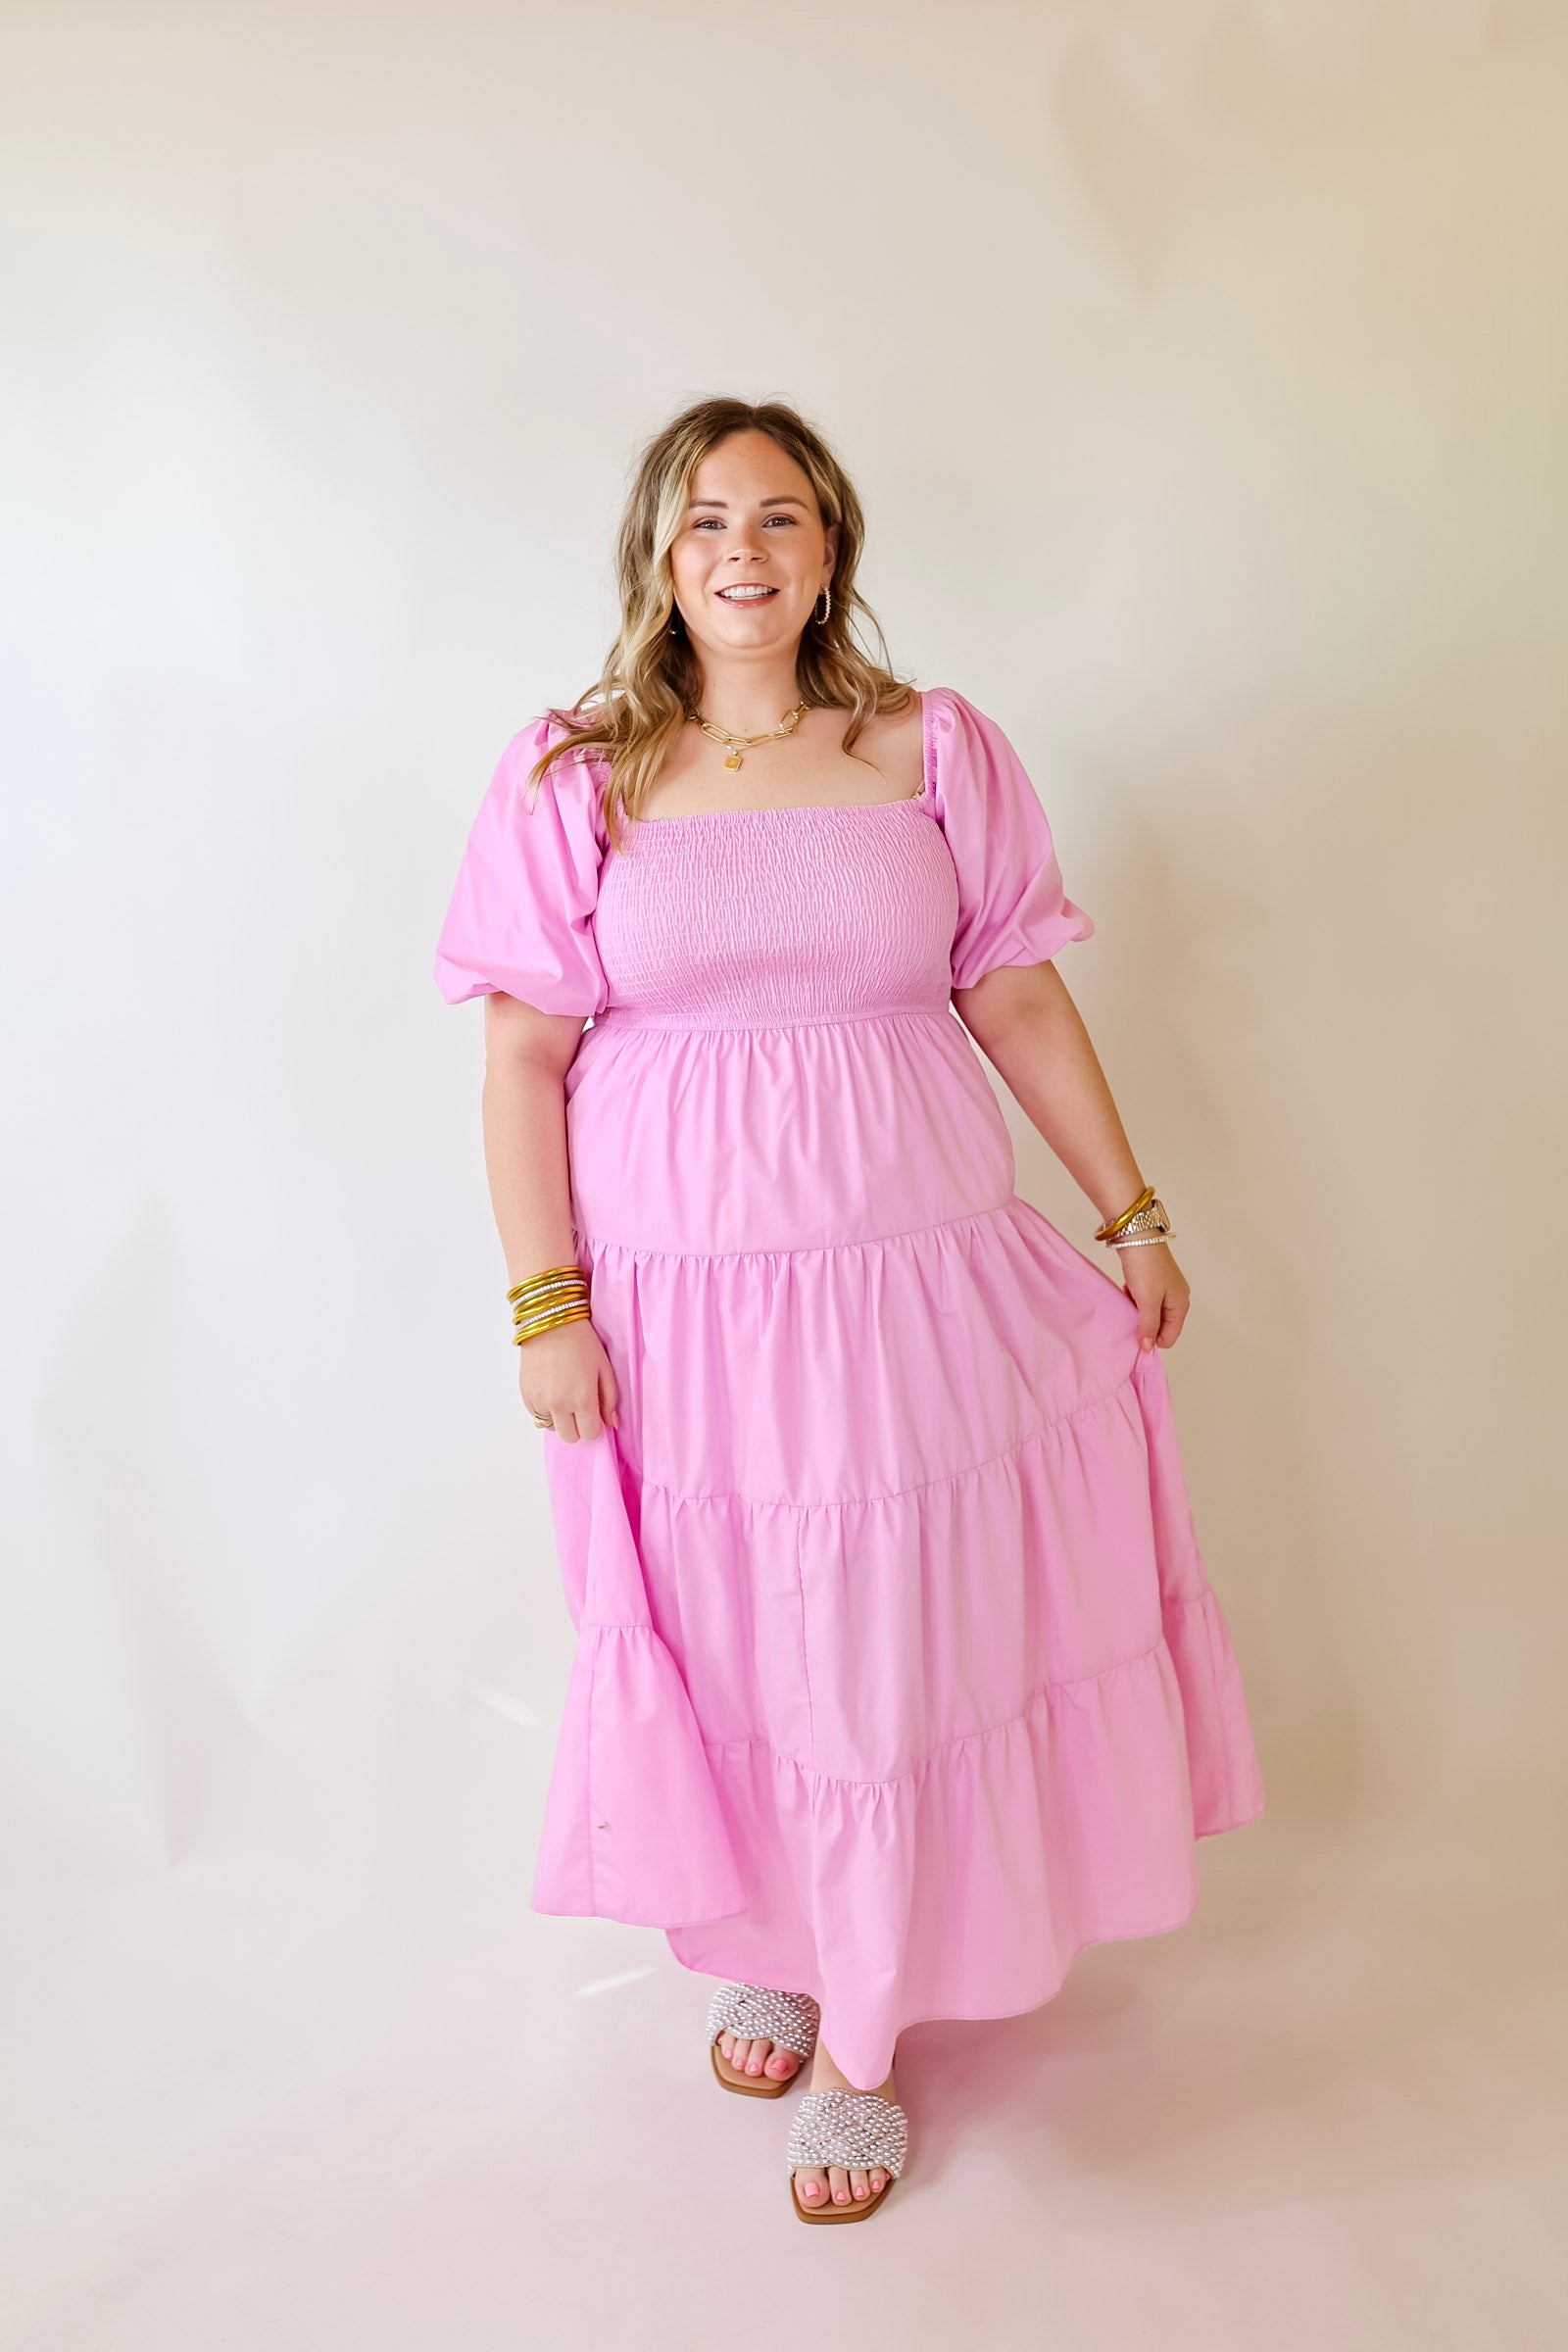 Santorini Sunshine Short Balloon Sleeve Maxi Dress in Light Pink - Giddy Up Glamour Boutique